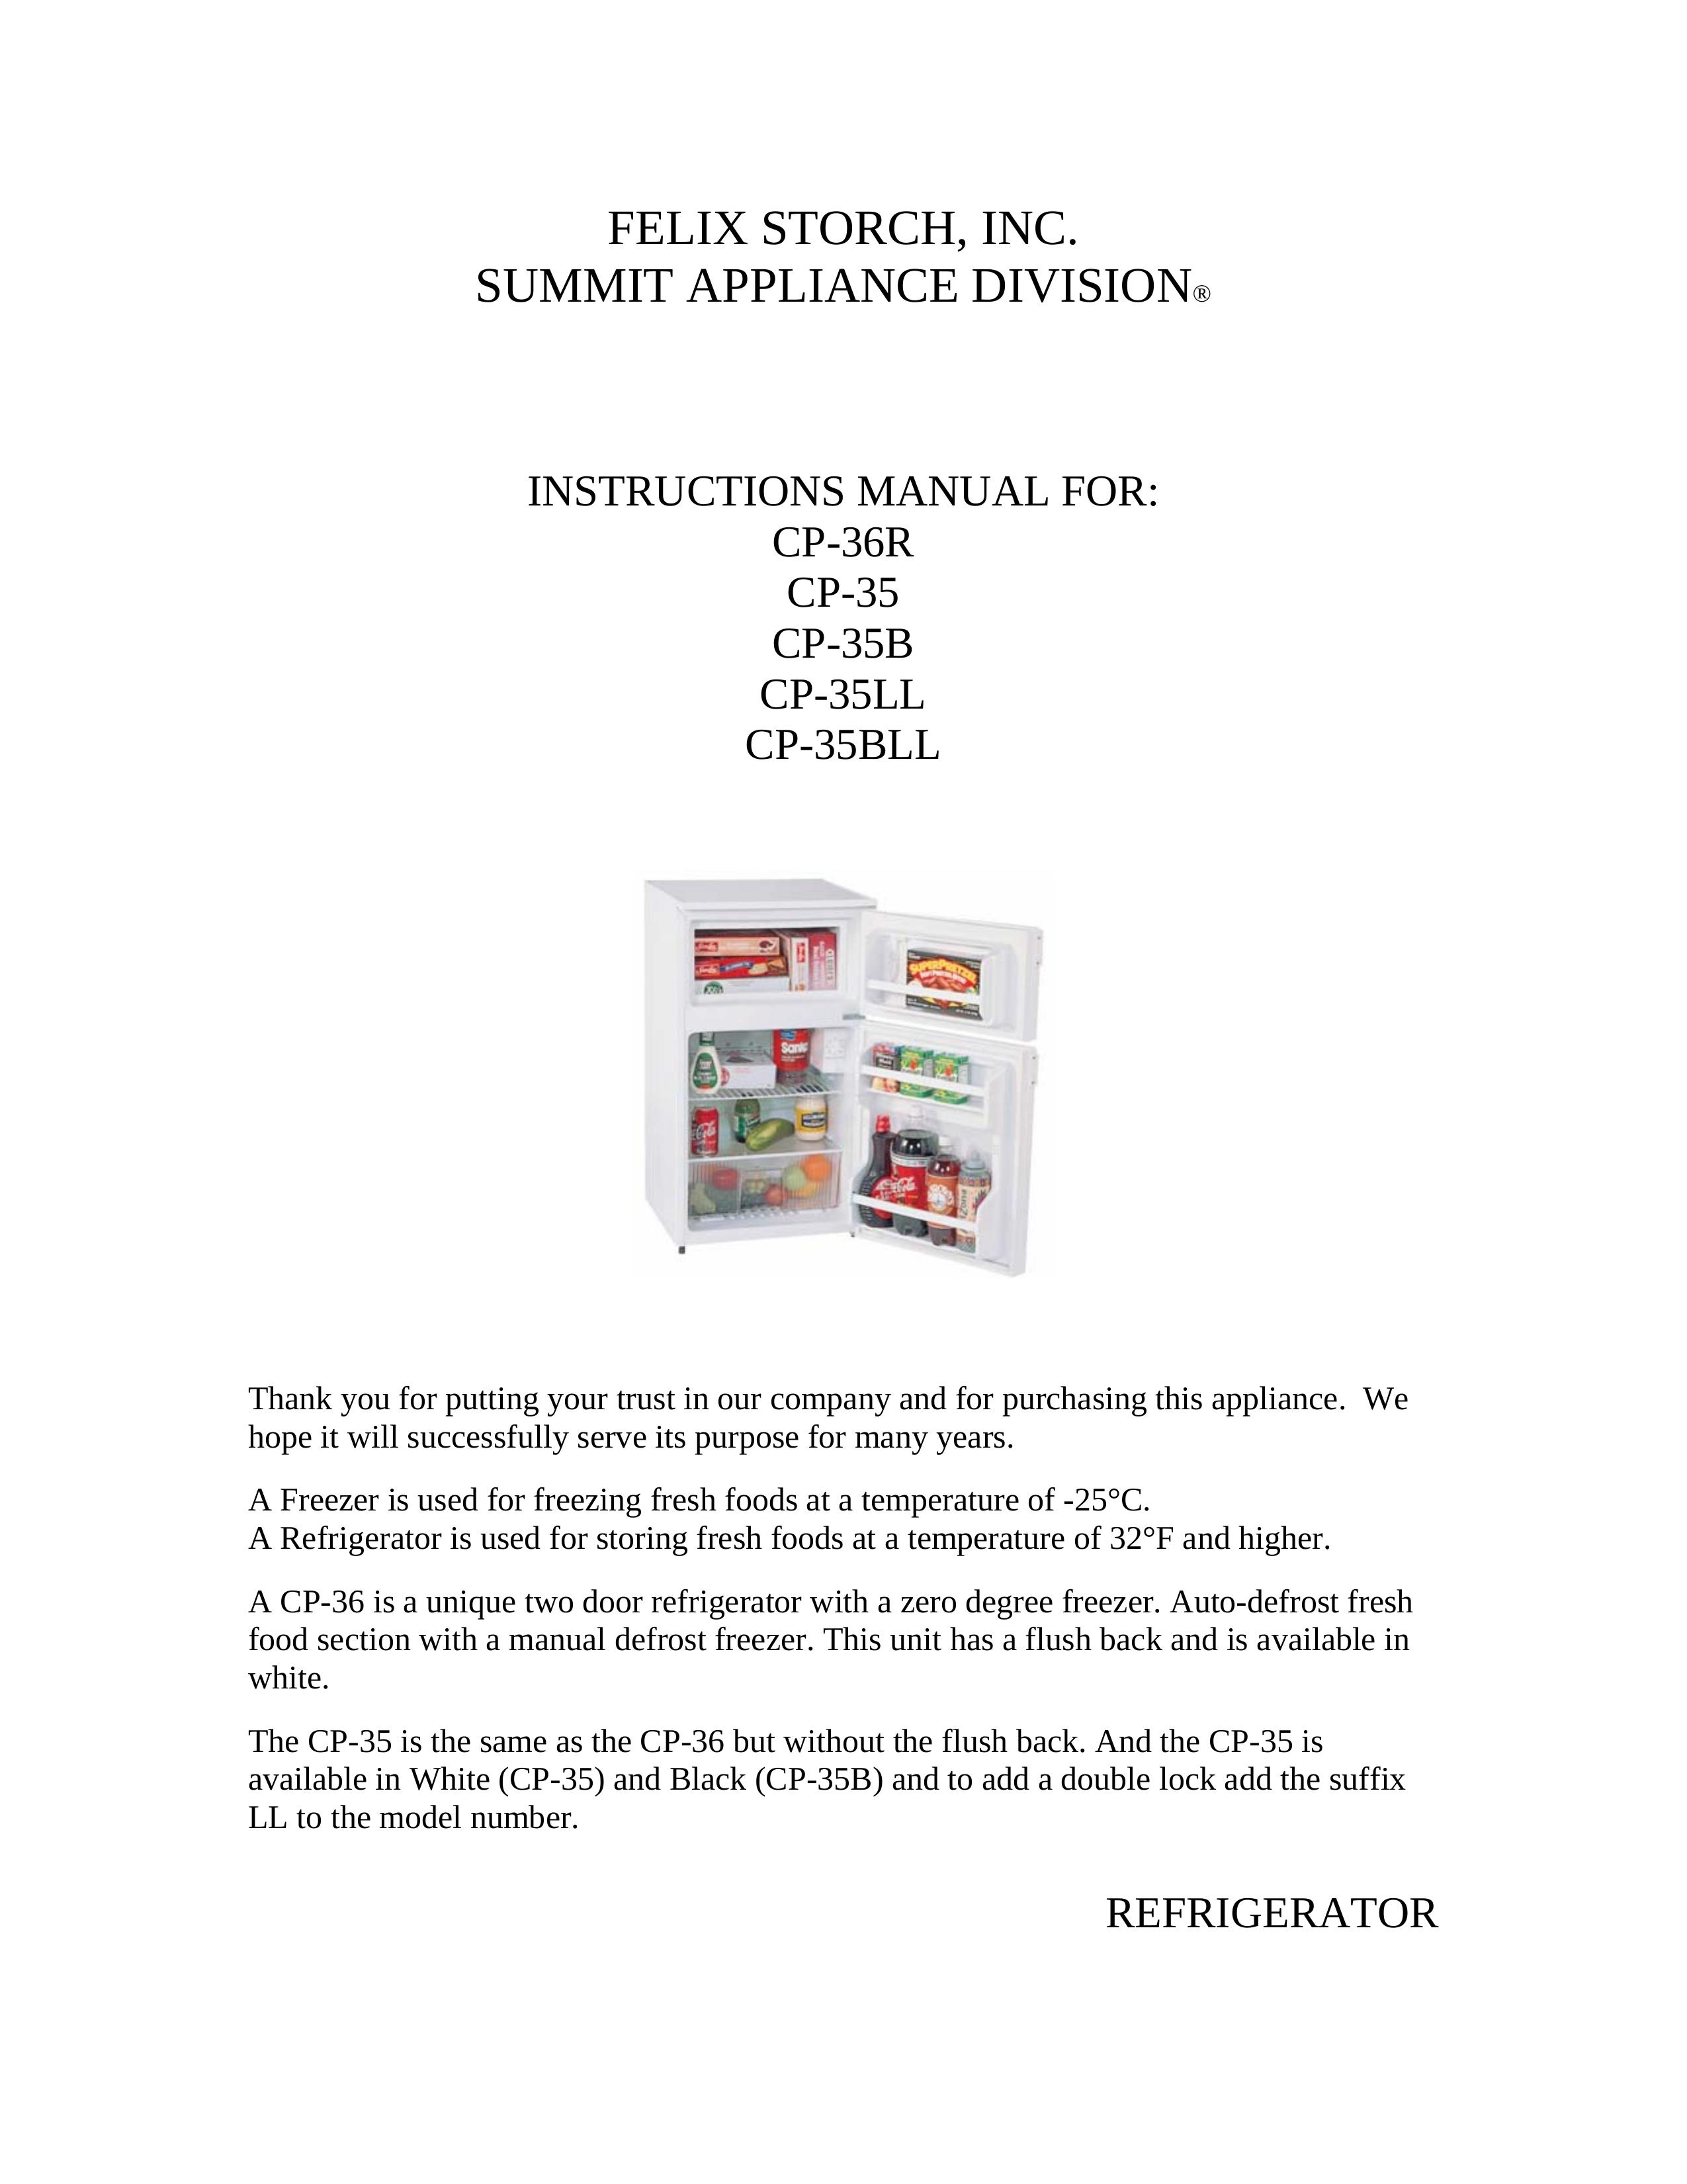 Summit CP-35BLL Refrigerator User Manual